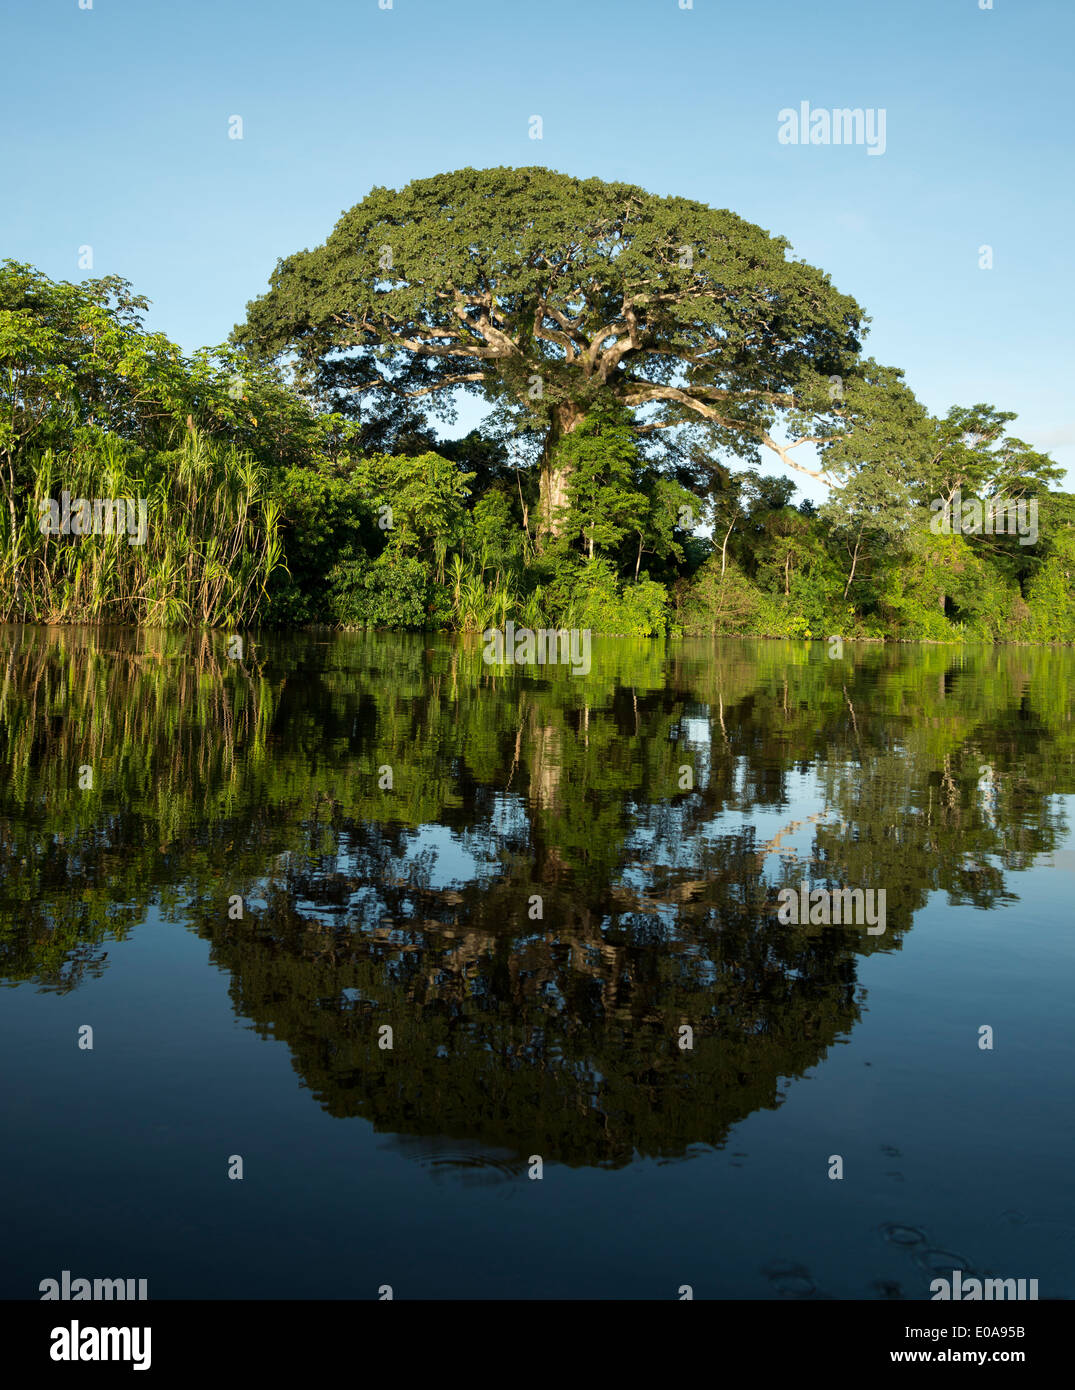 Amazon basin fotografías e imágenes de alta resolución - Alamy